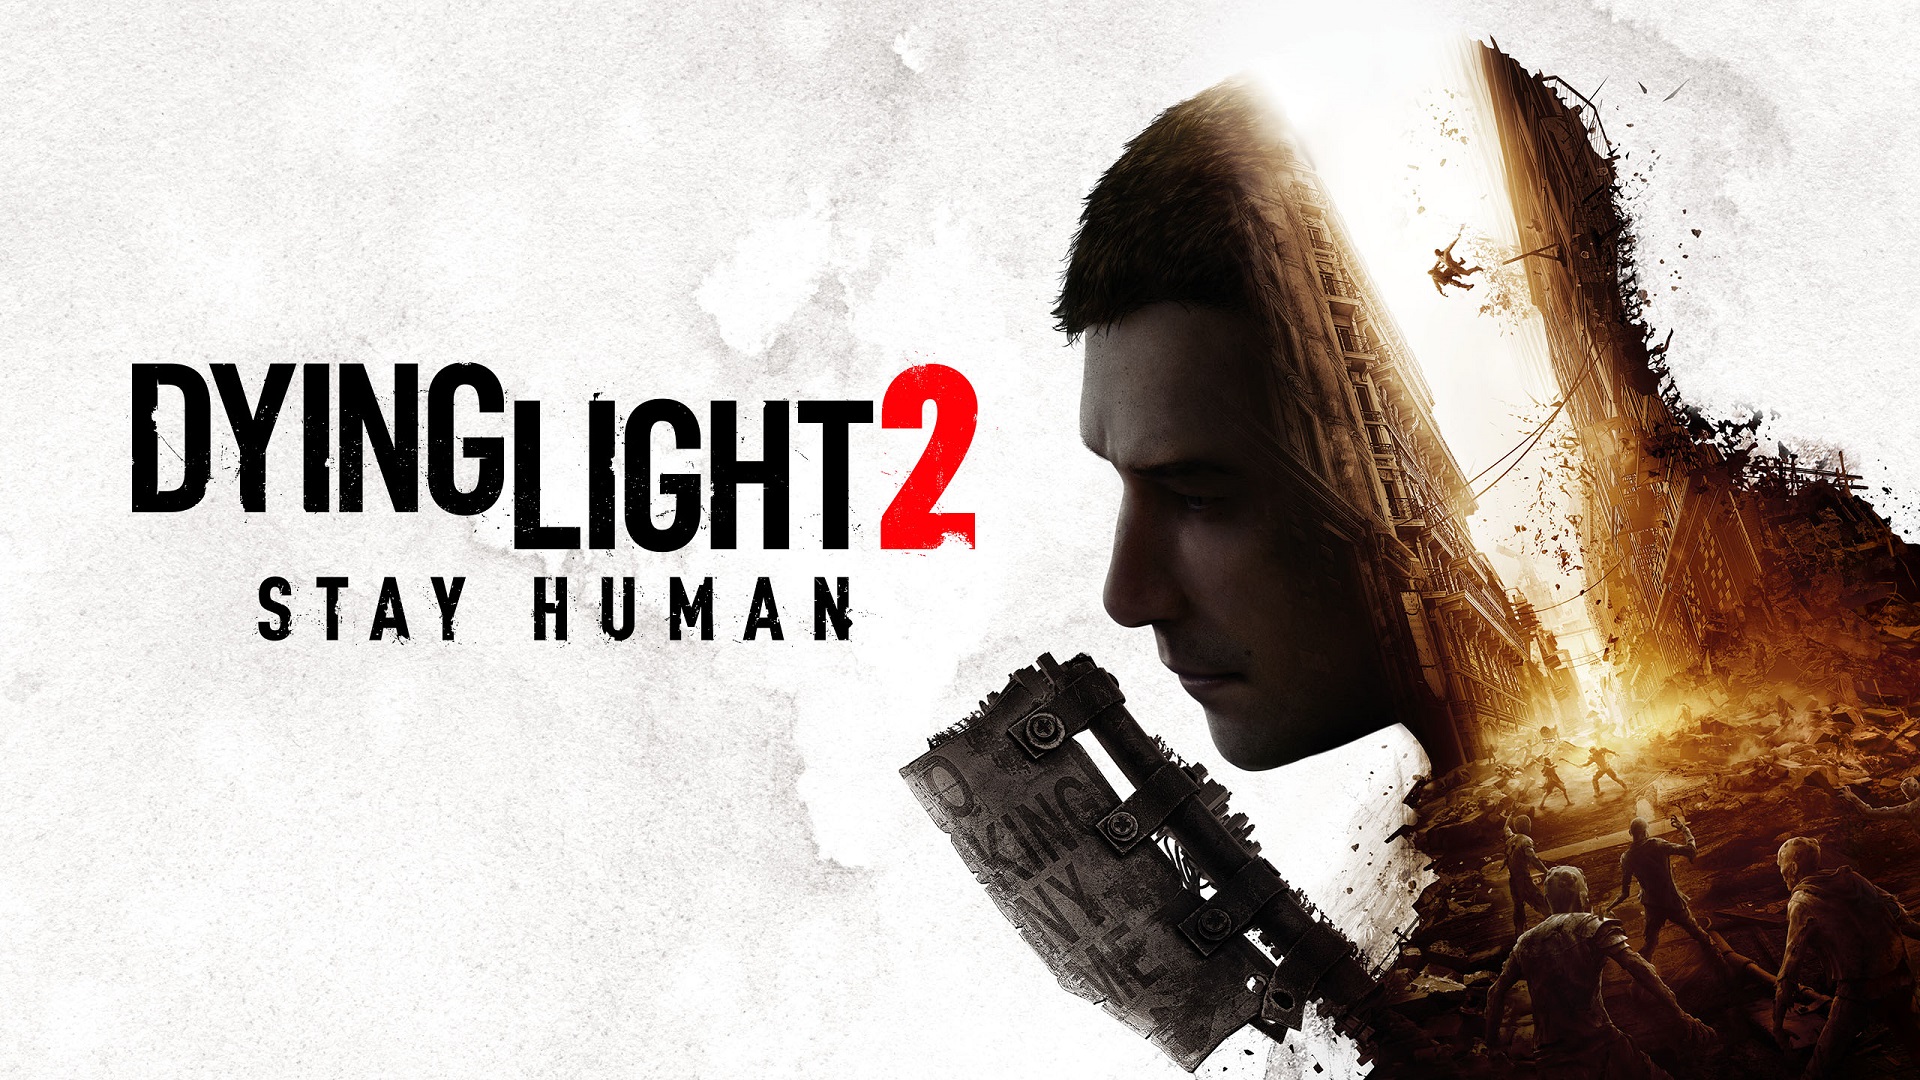 Dying Light 2 fügt neue Performance-Modi auf PS5 hinzu Titel